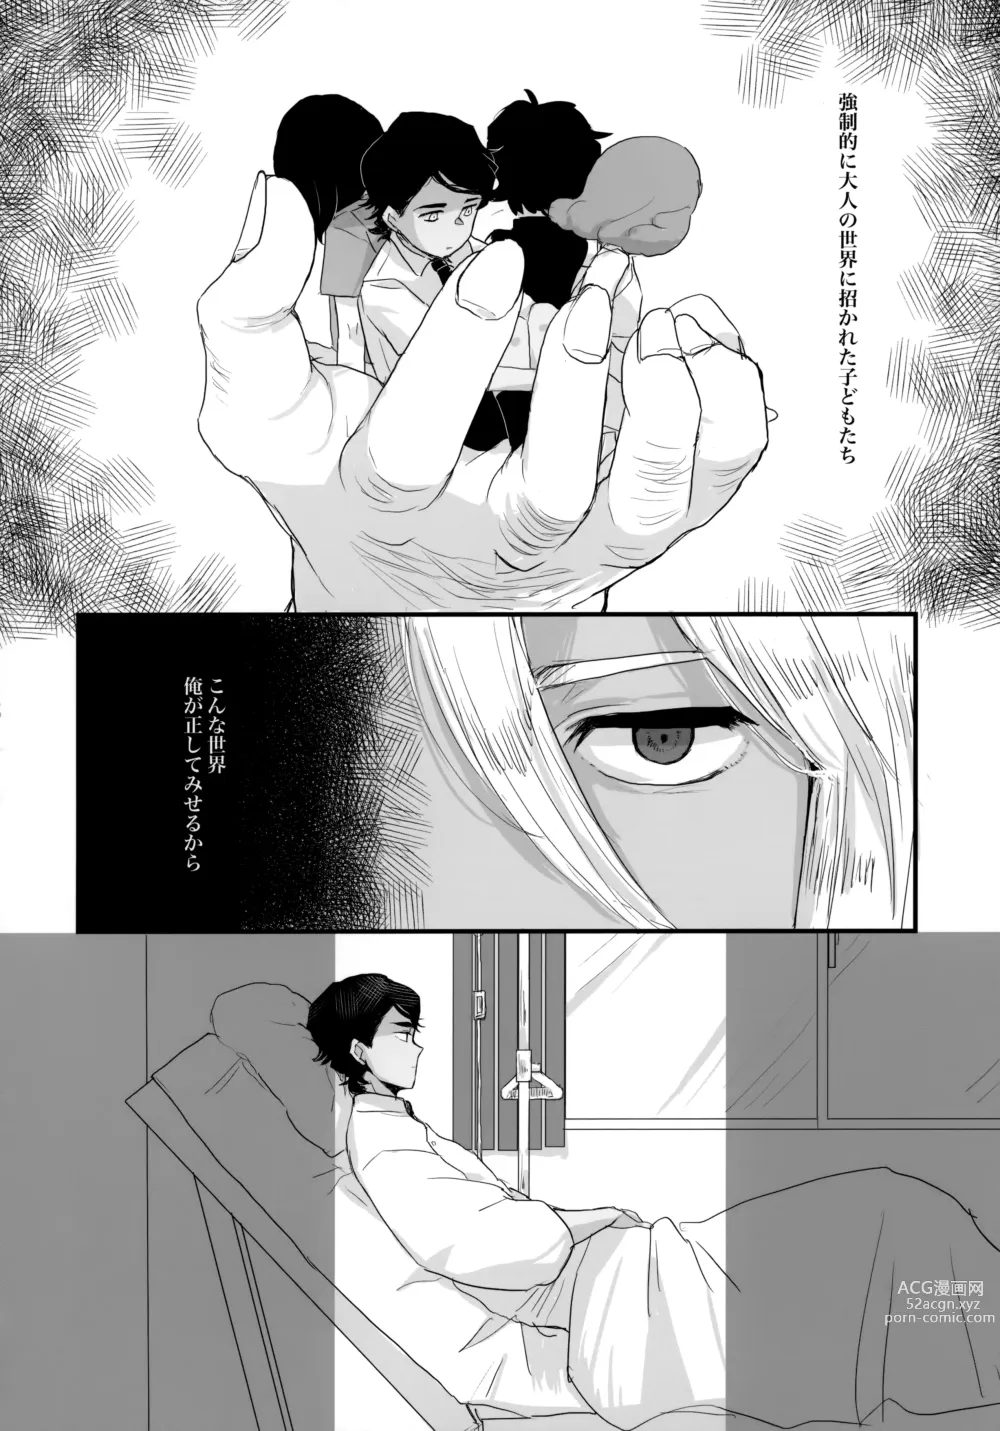 Page 61 of doujinshi Torikago